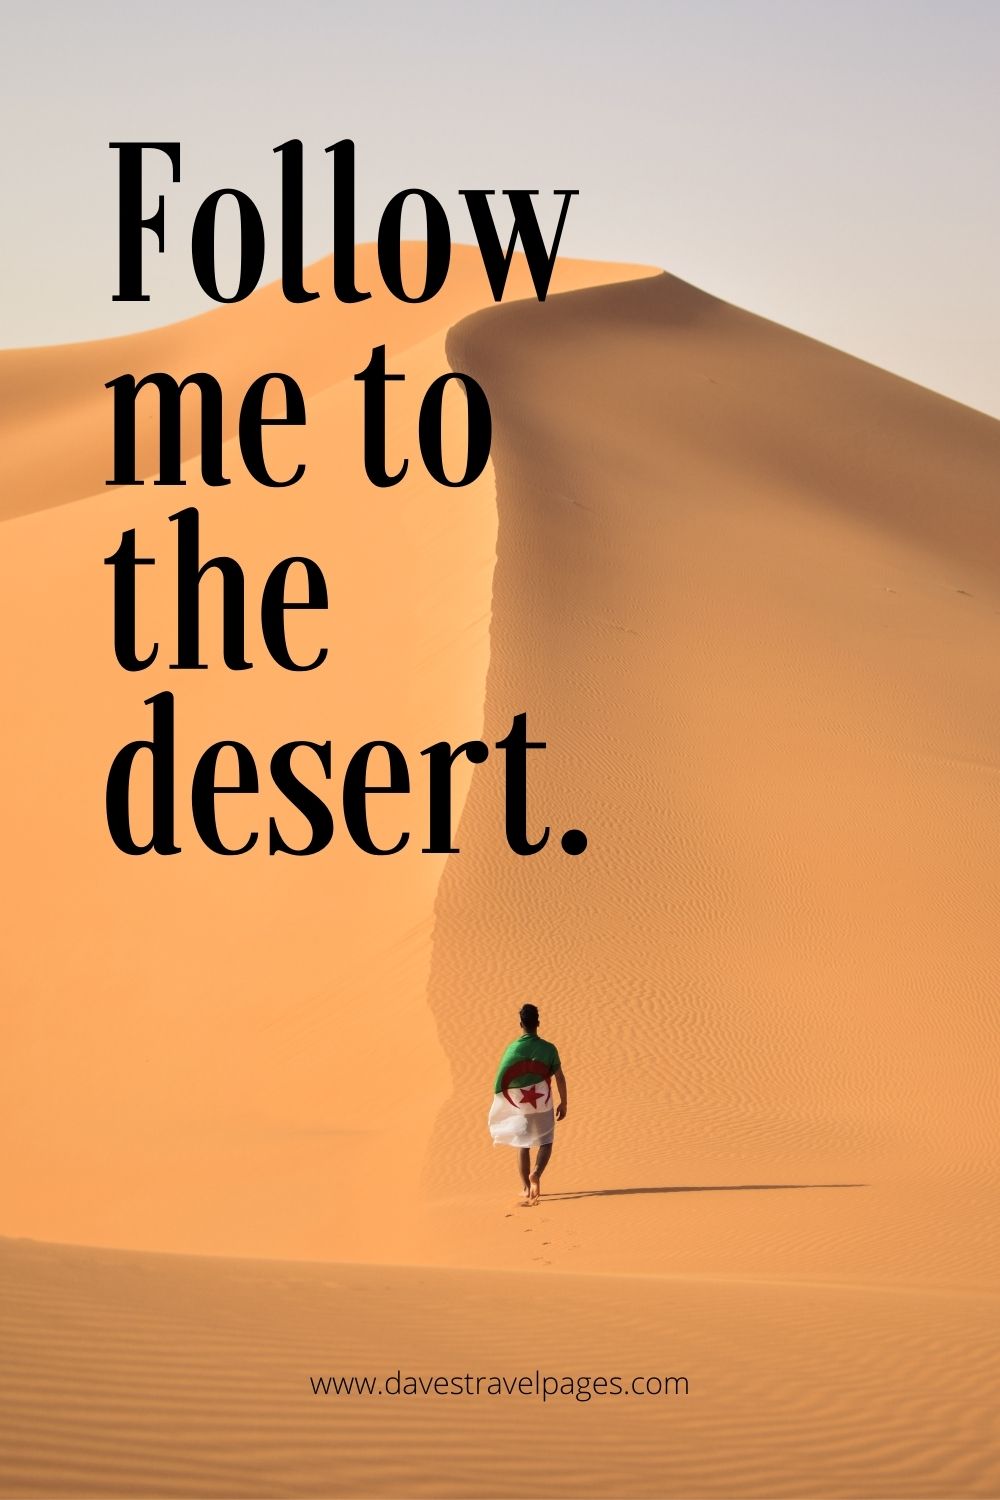 Follow me to the desert caption for Instagram